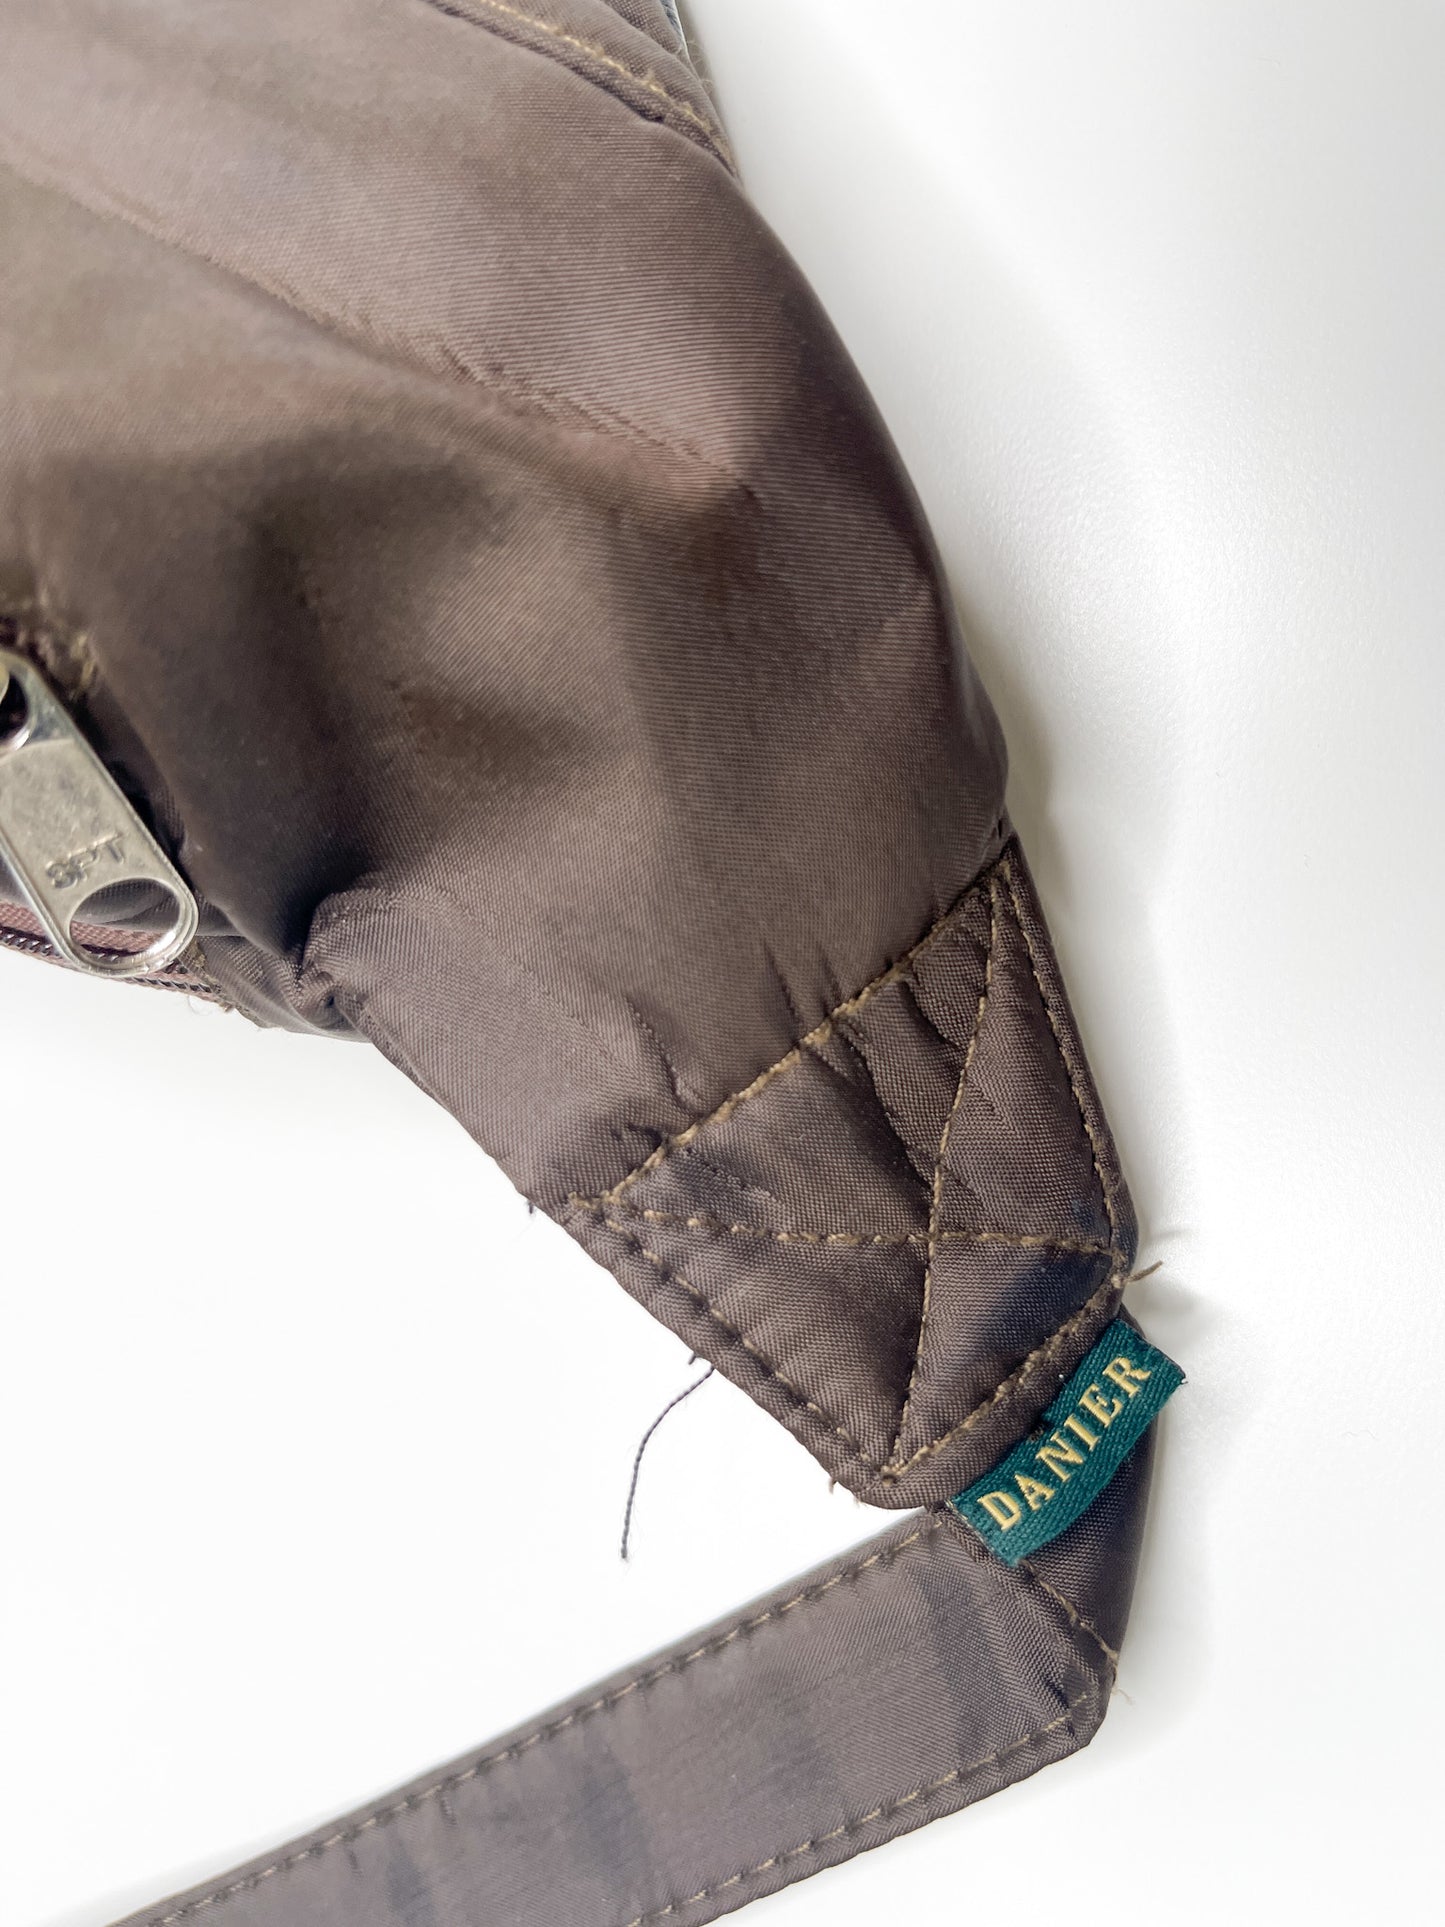 Vintage Danier Belt Bag | Vintage Danier Fanny Pack - Brown